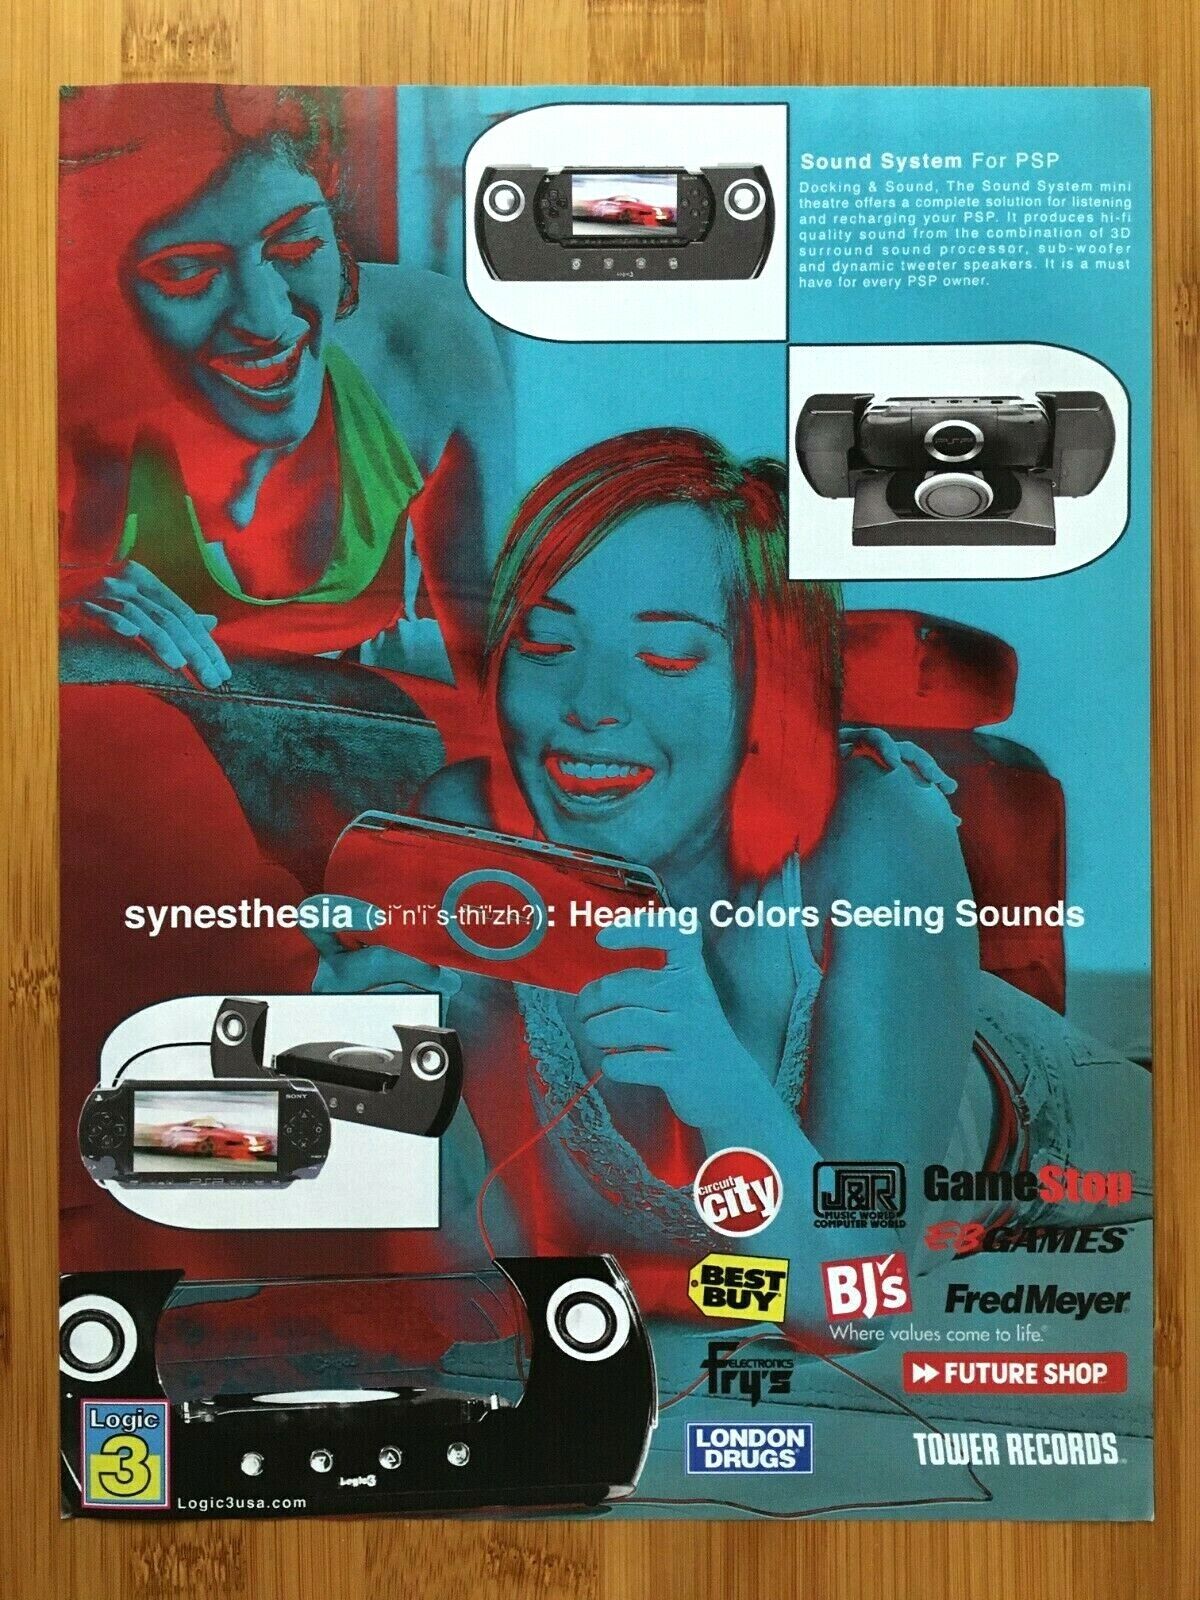 2006 Logic 3 PSP Sound System Speakers Print Ad/Poster Promo Art Synesthesia 